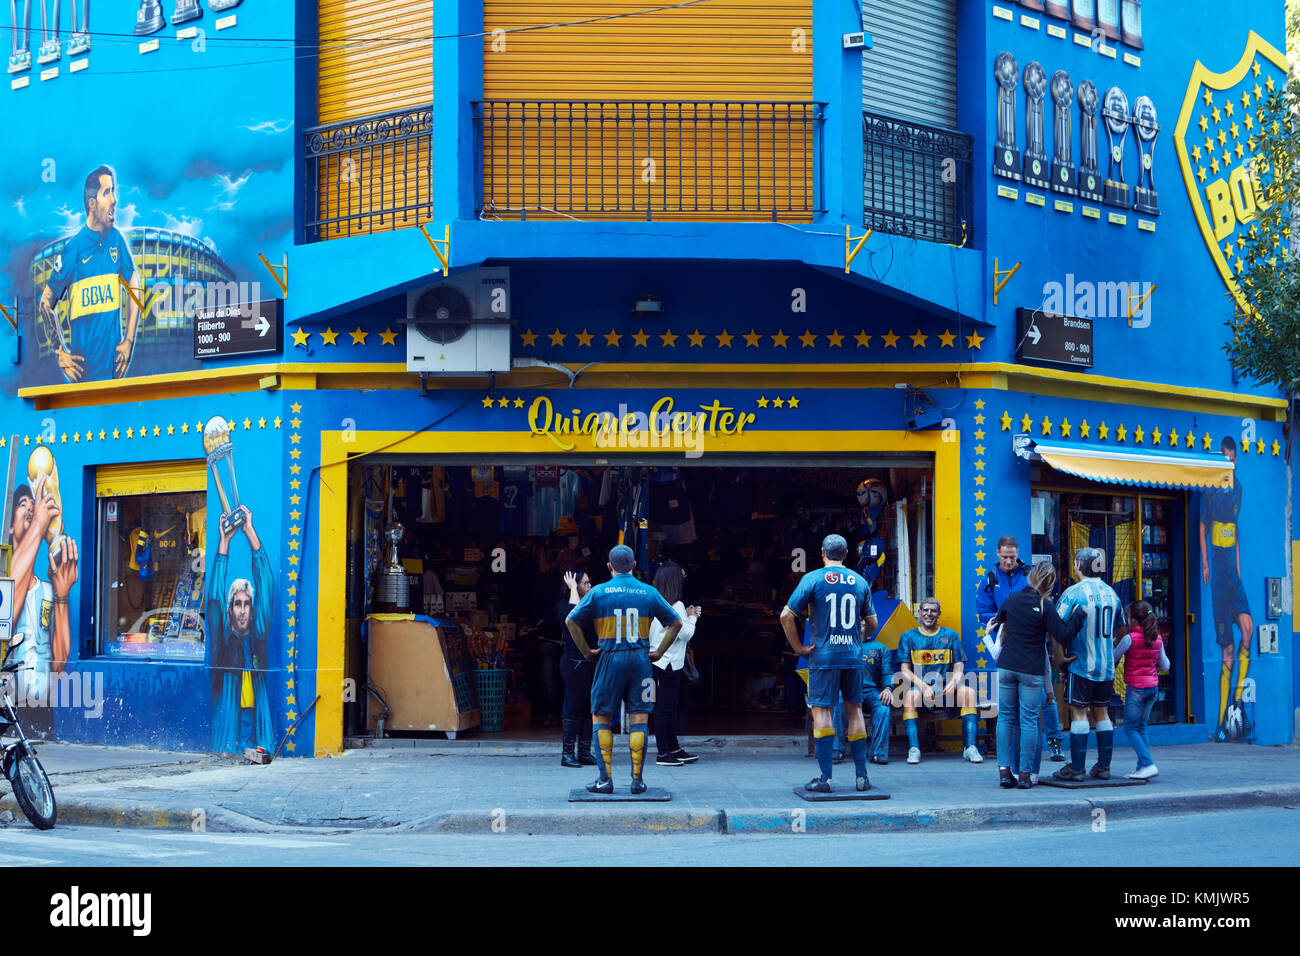 Boca Junior football shop, La Boca, Buenos Aires, Argentina, South America Stock Photo